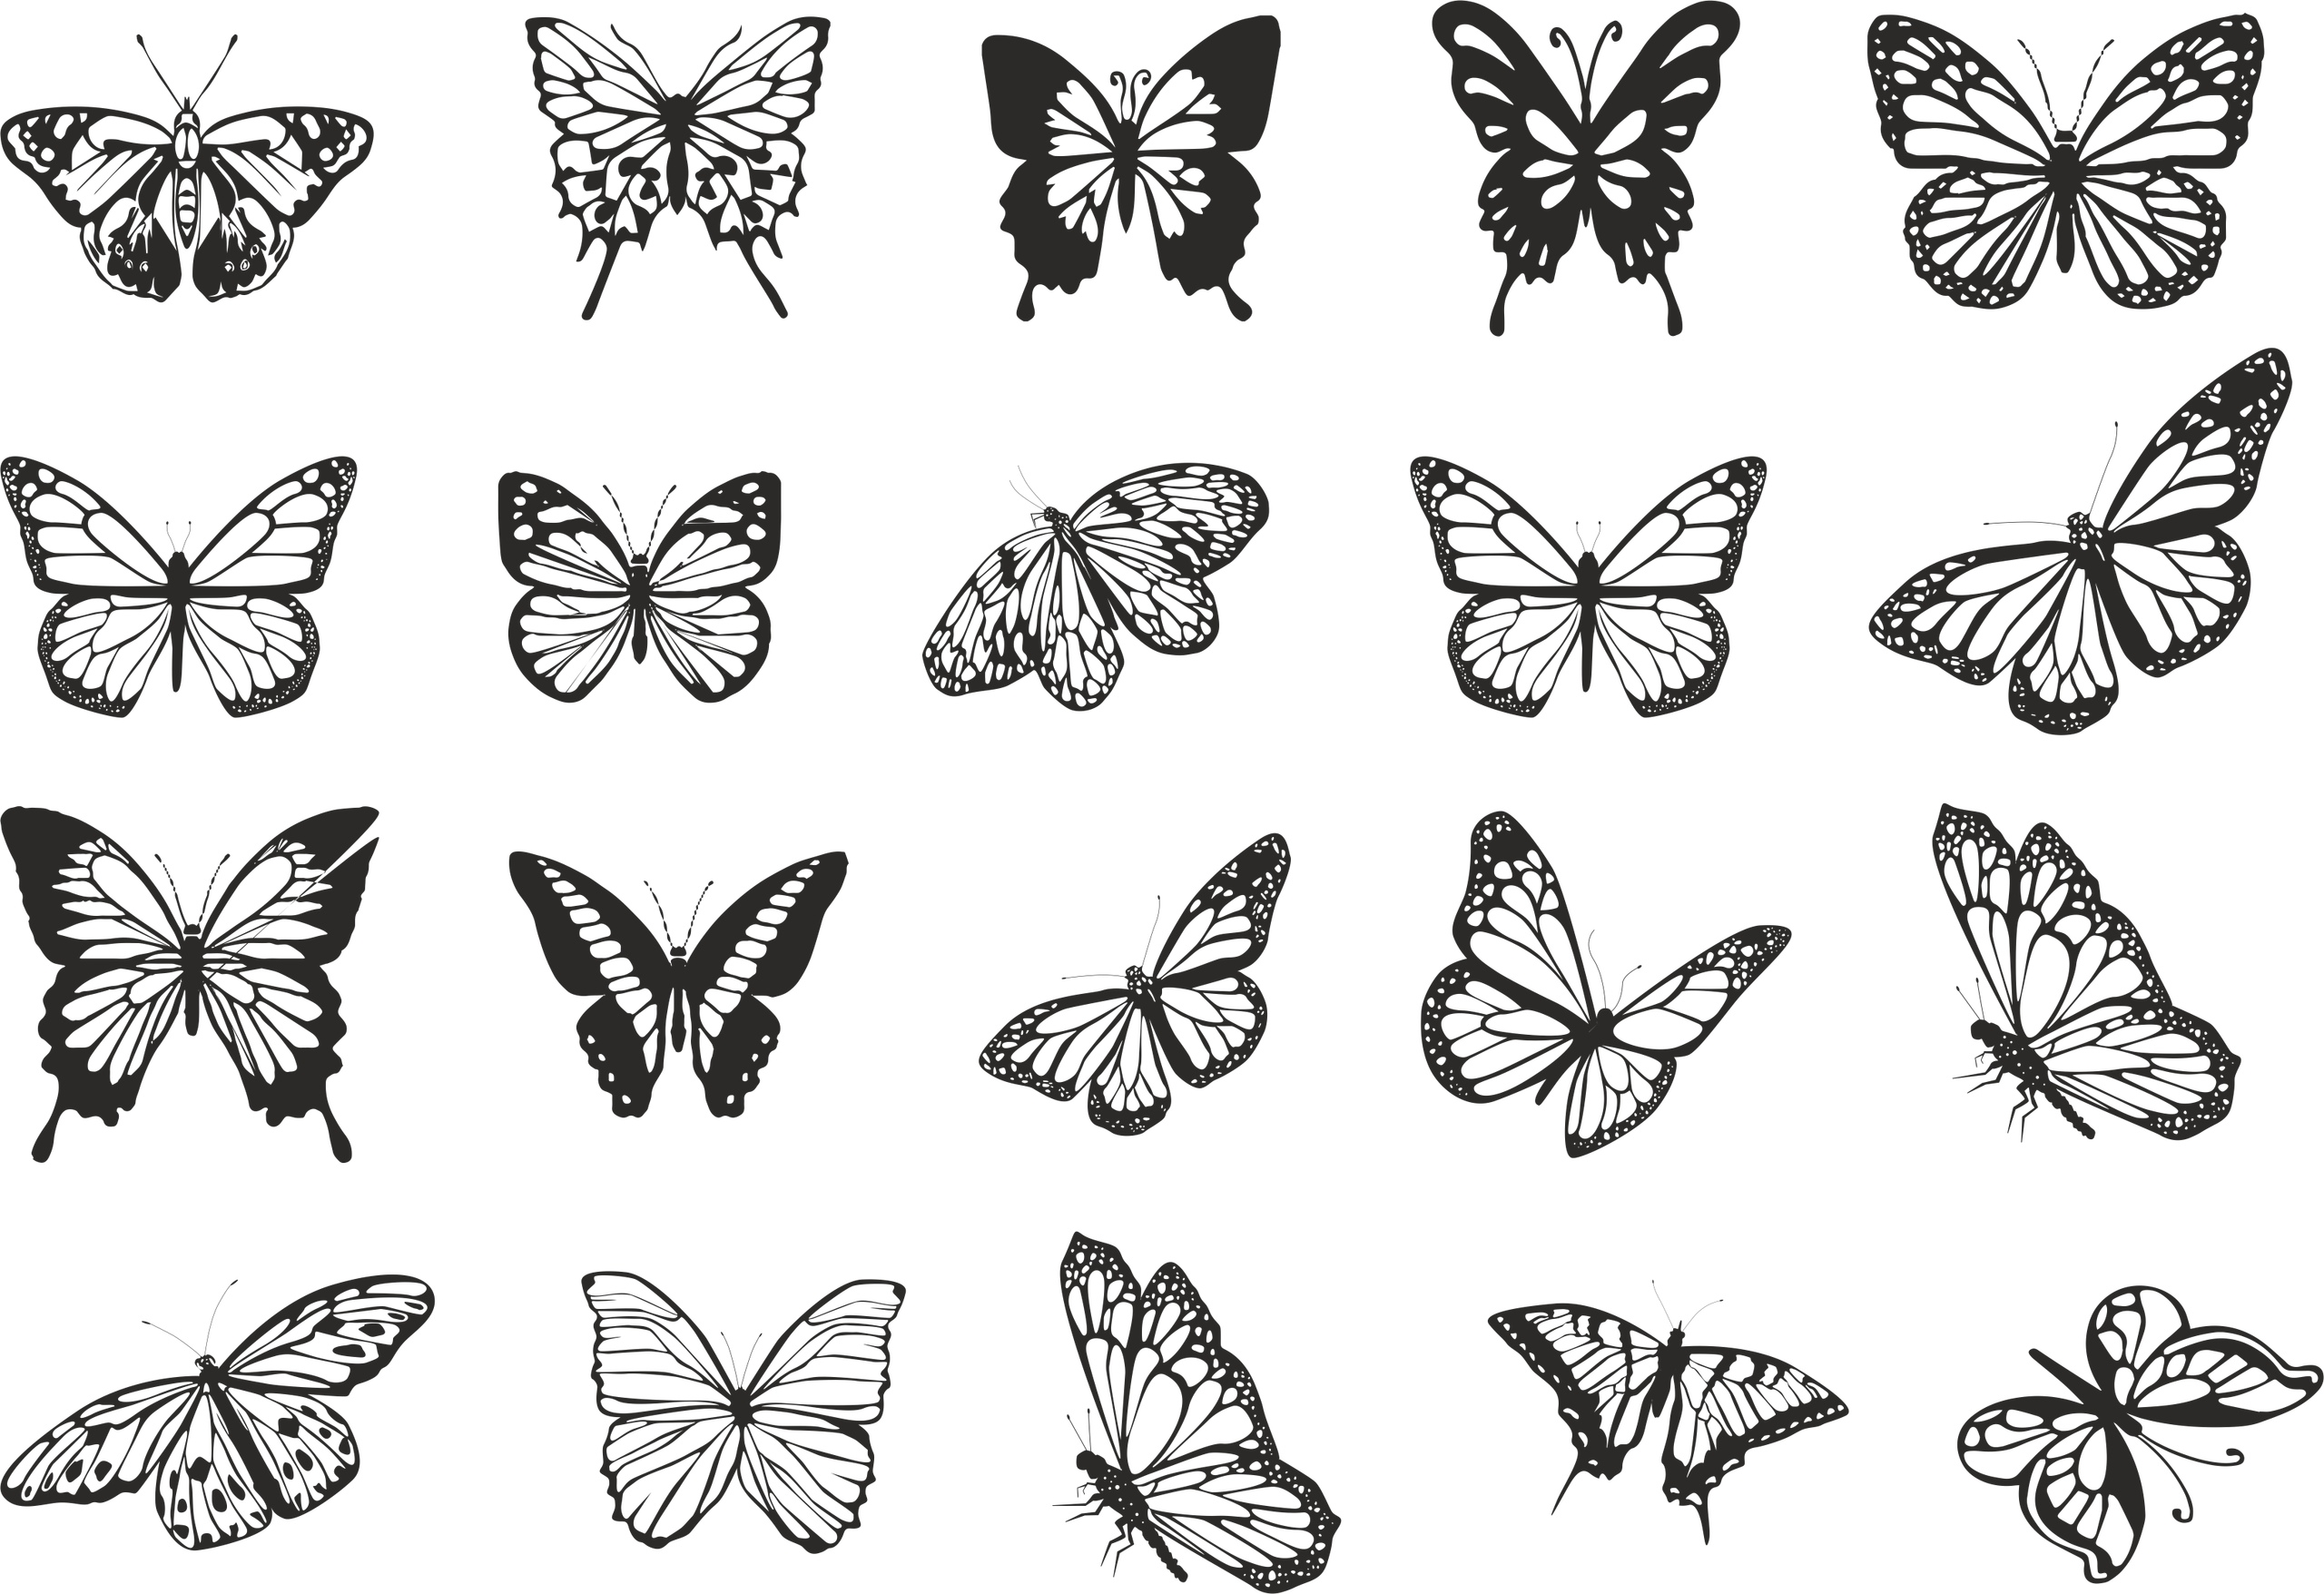 Flying Butterflies Vector Set Free Vector cdr Download - 3axis.co